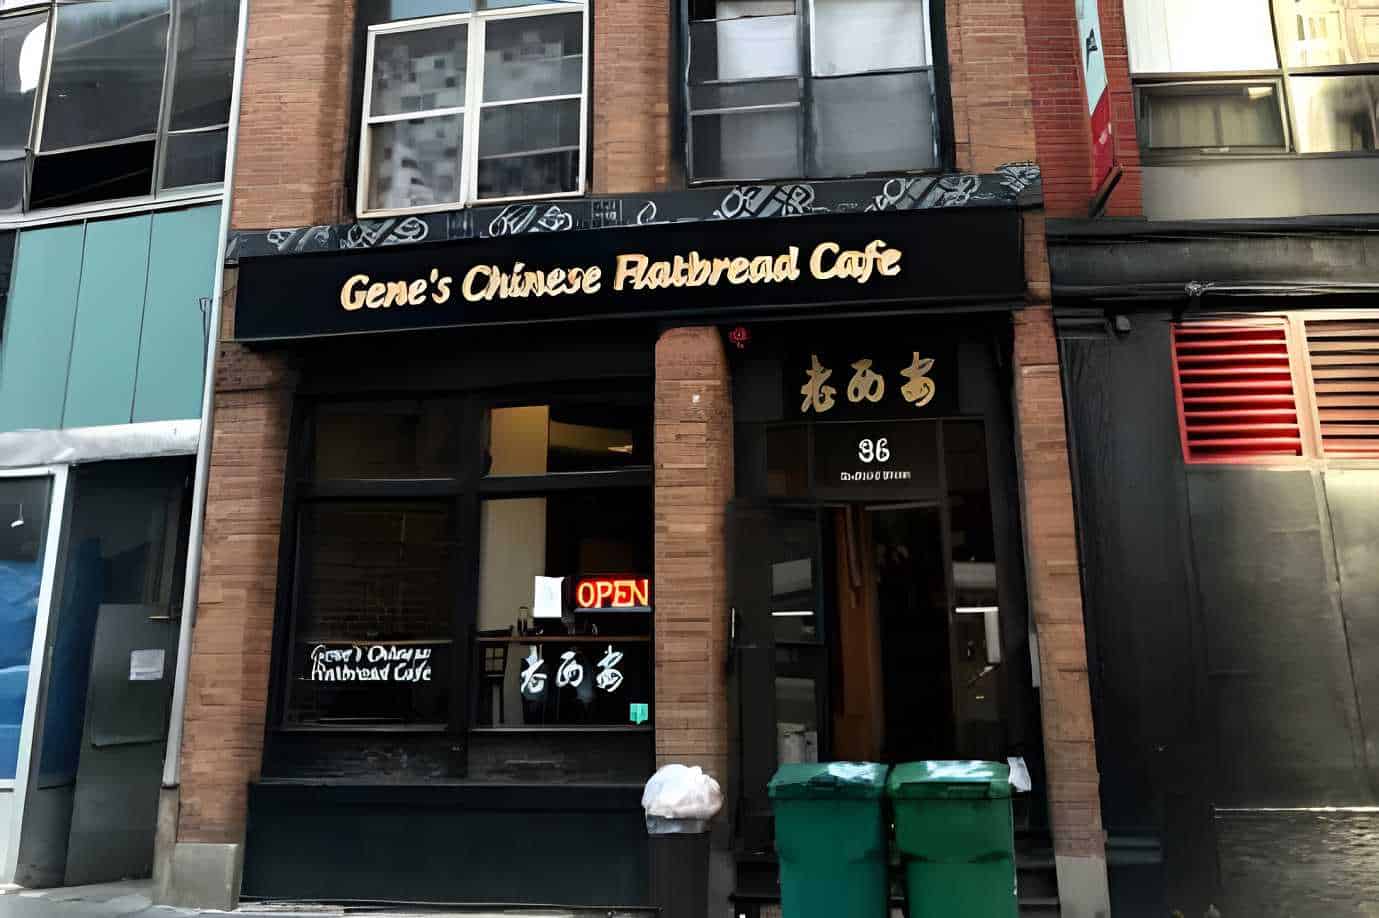 Gene’s Chinese Flatbread Cafe